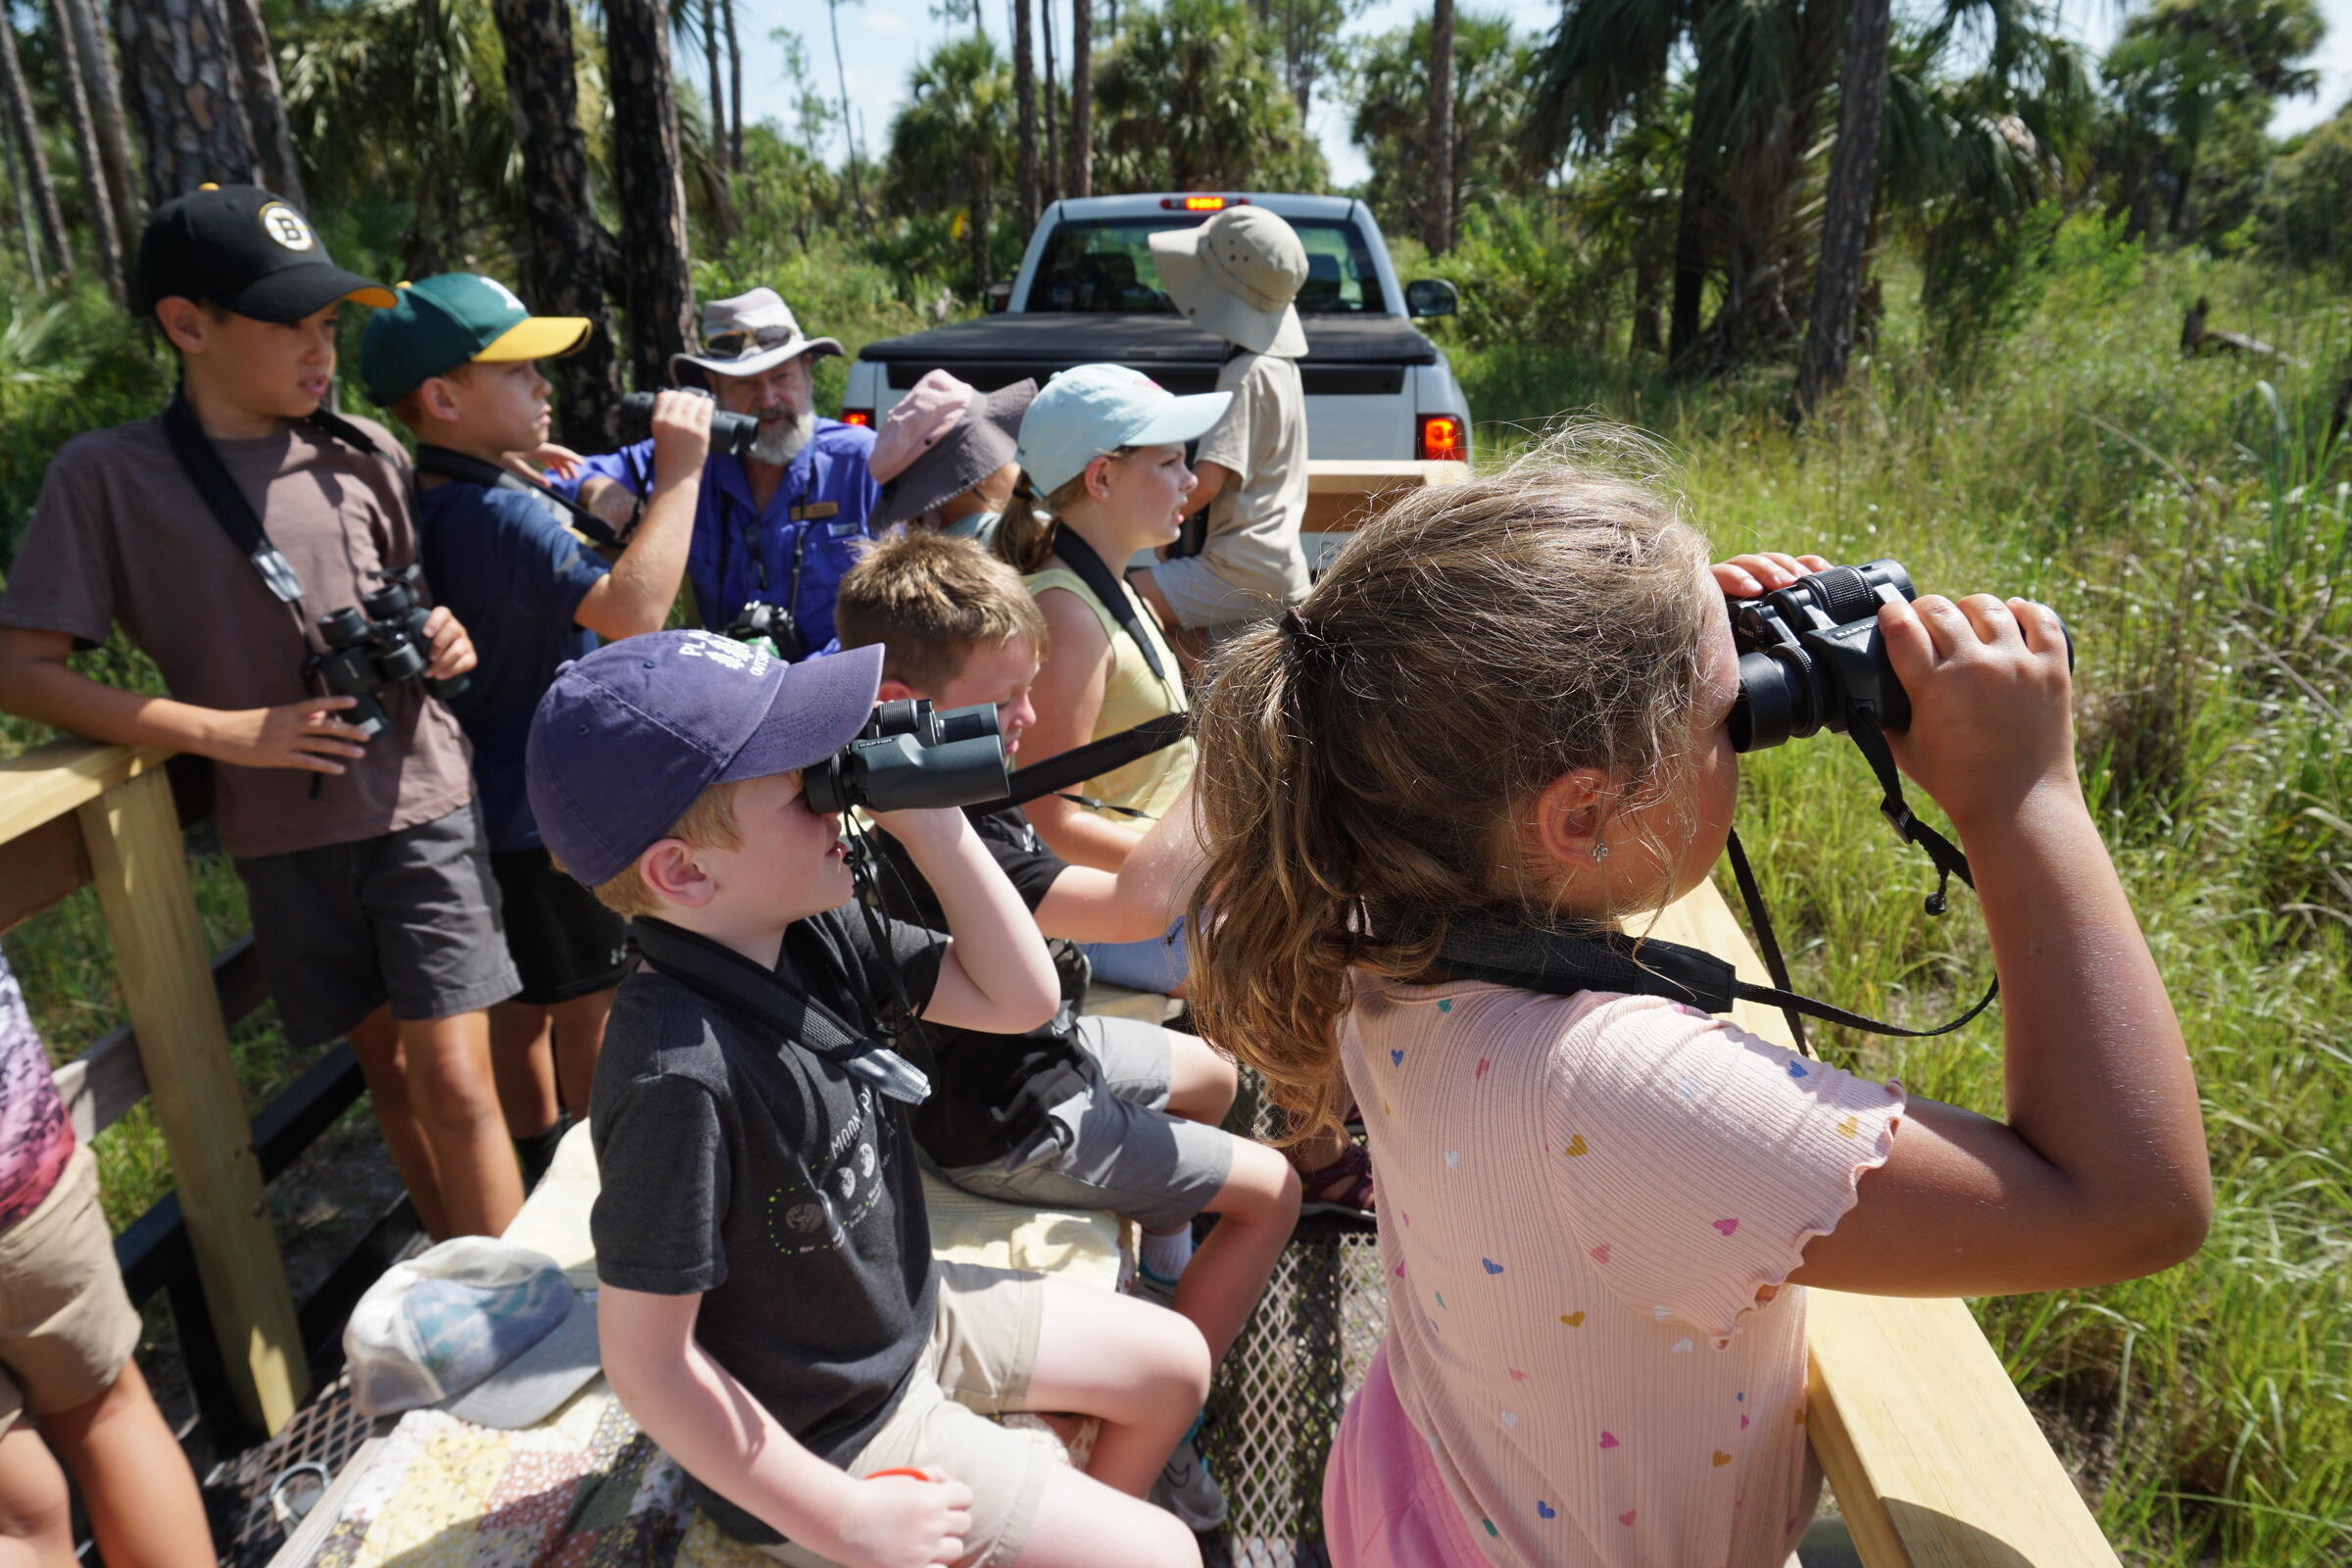 Students looking through binoculars at nature.